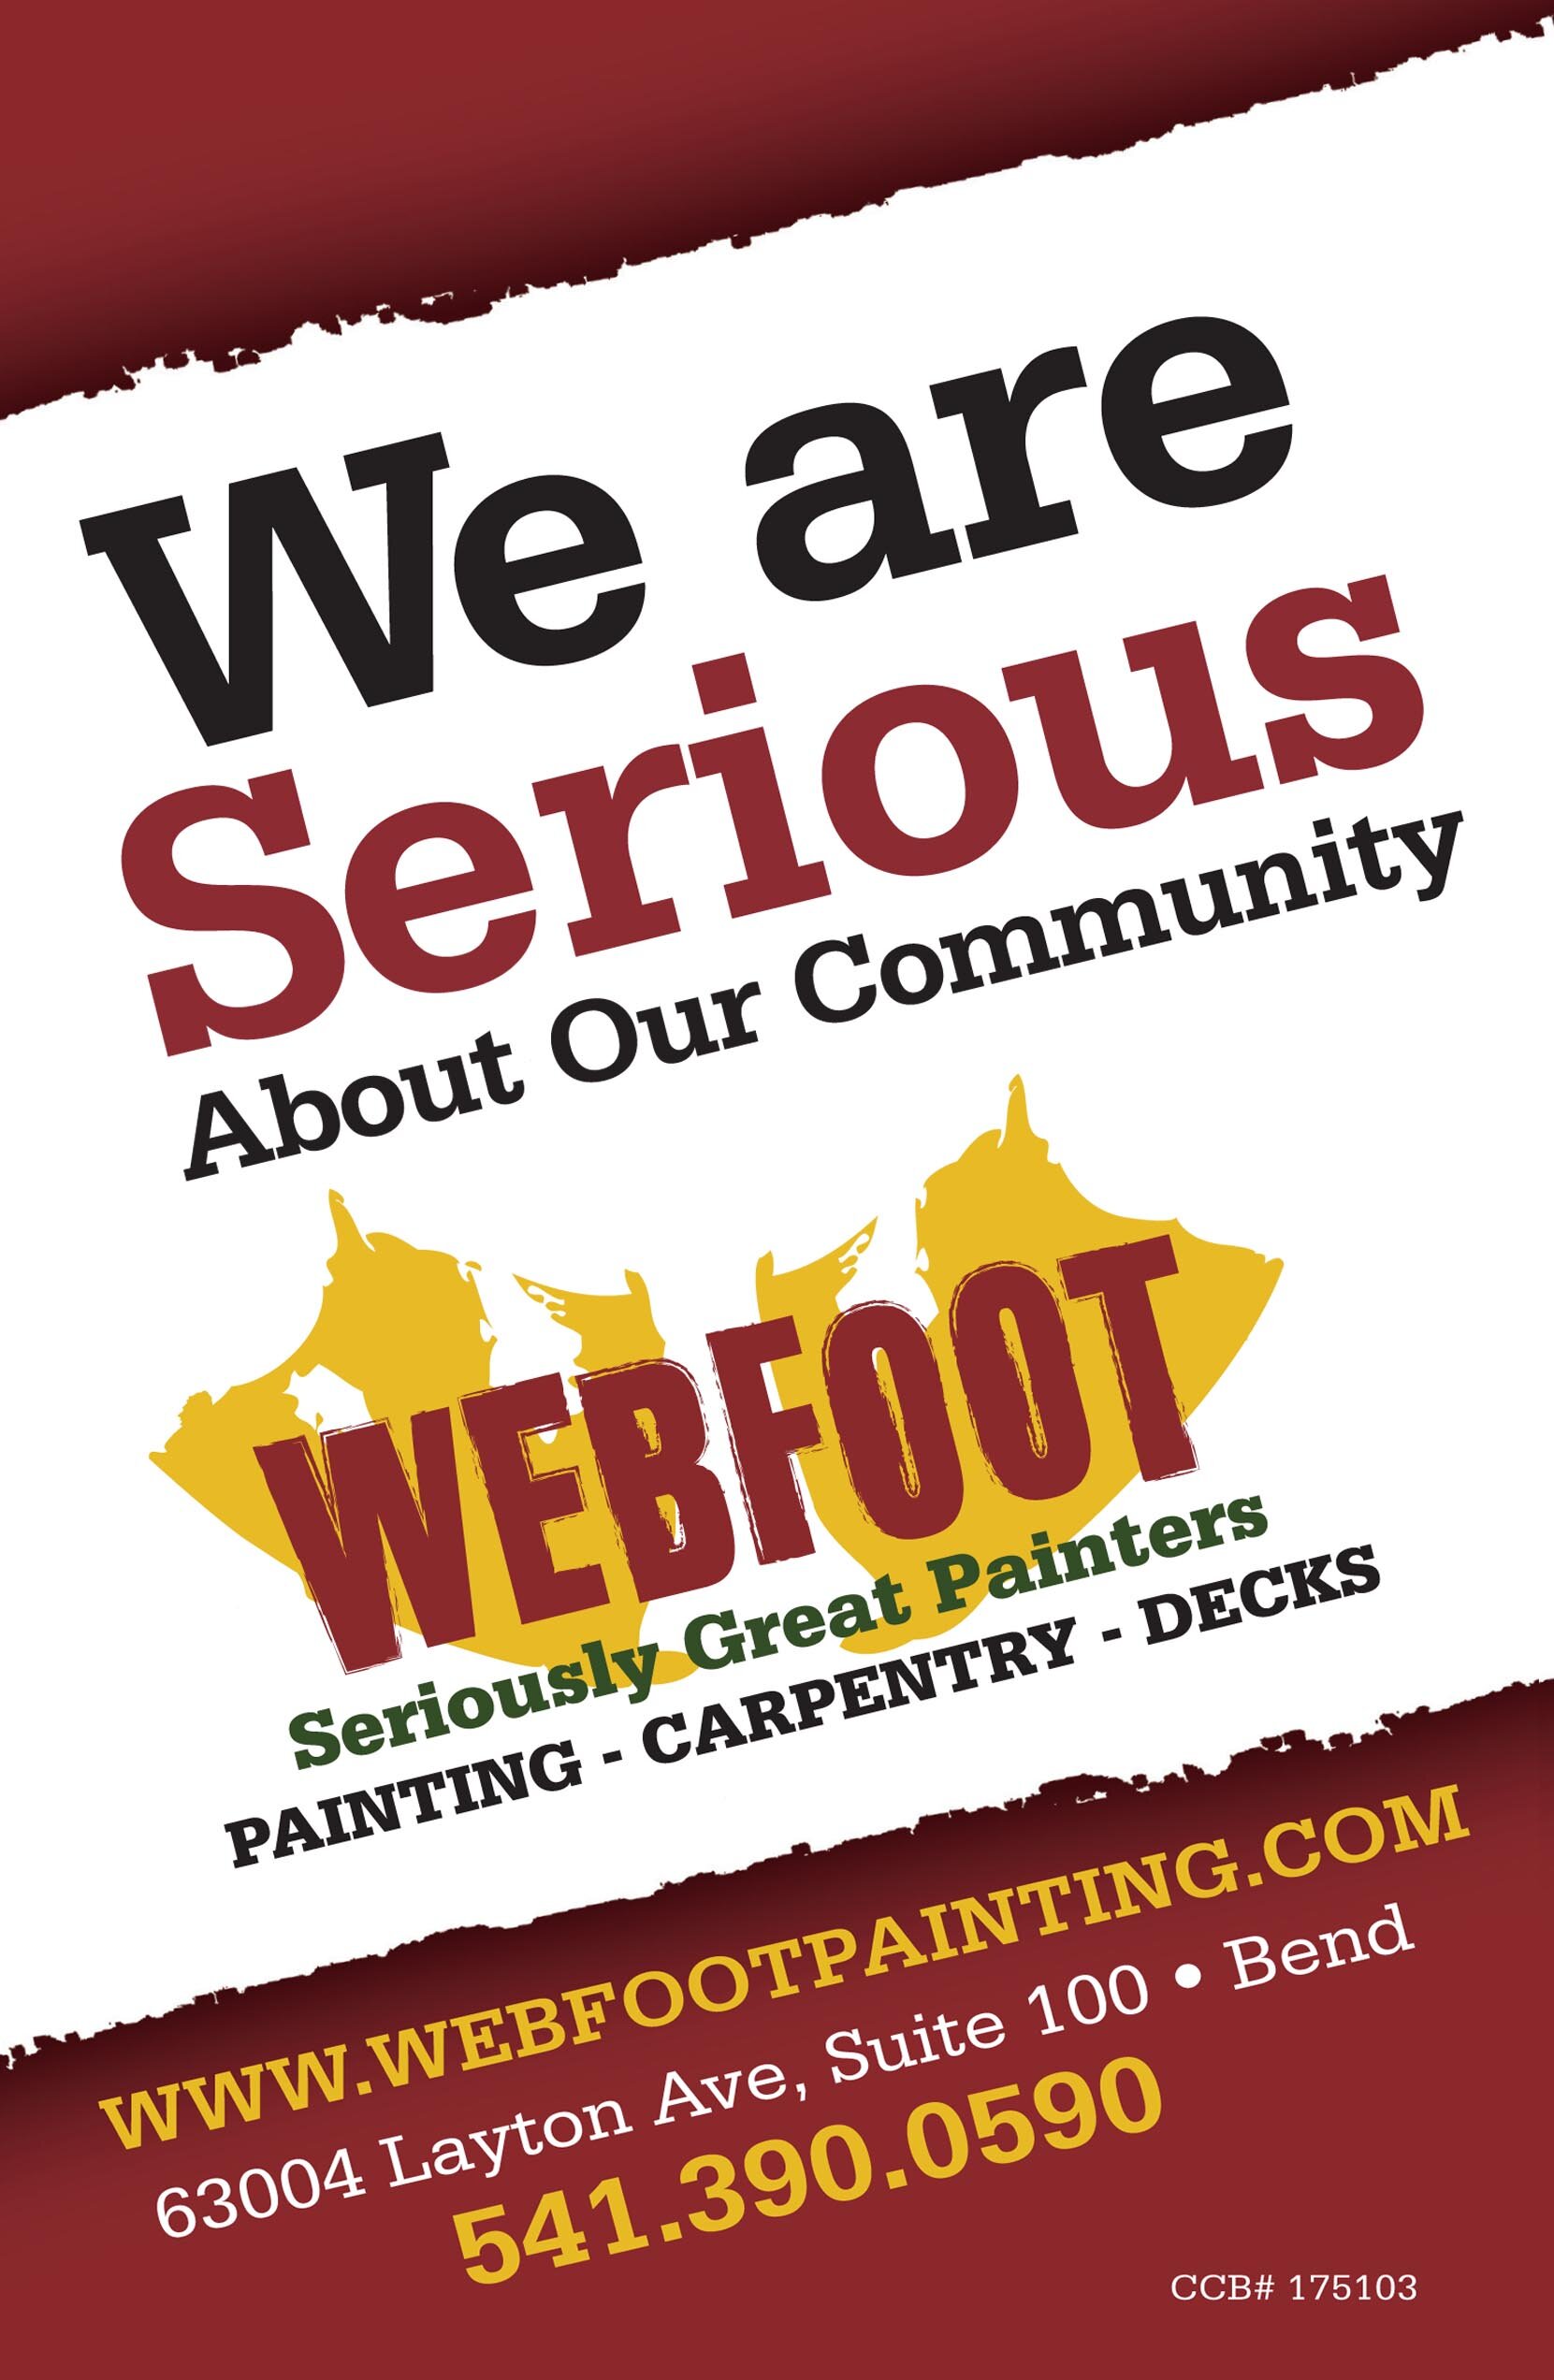 webfoot painting.jpg